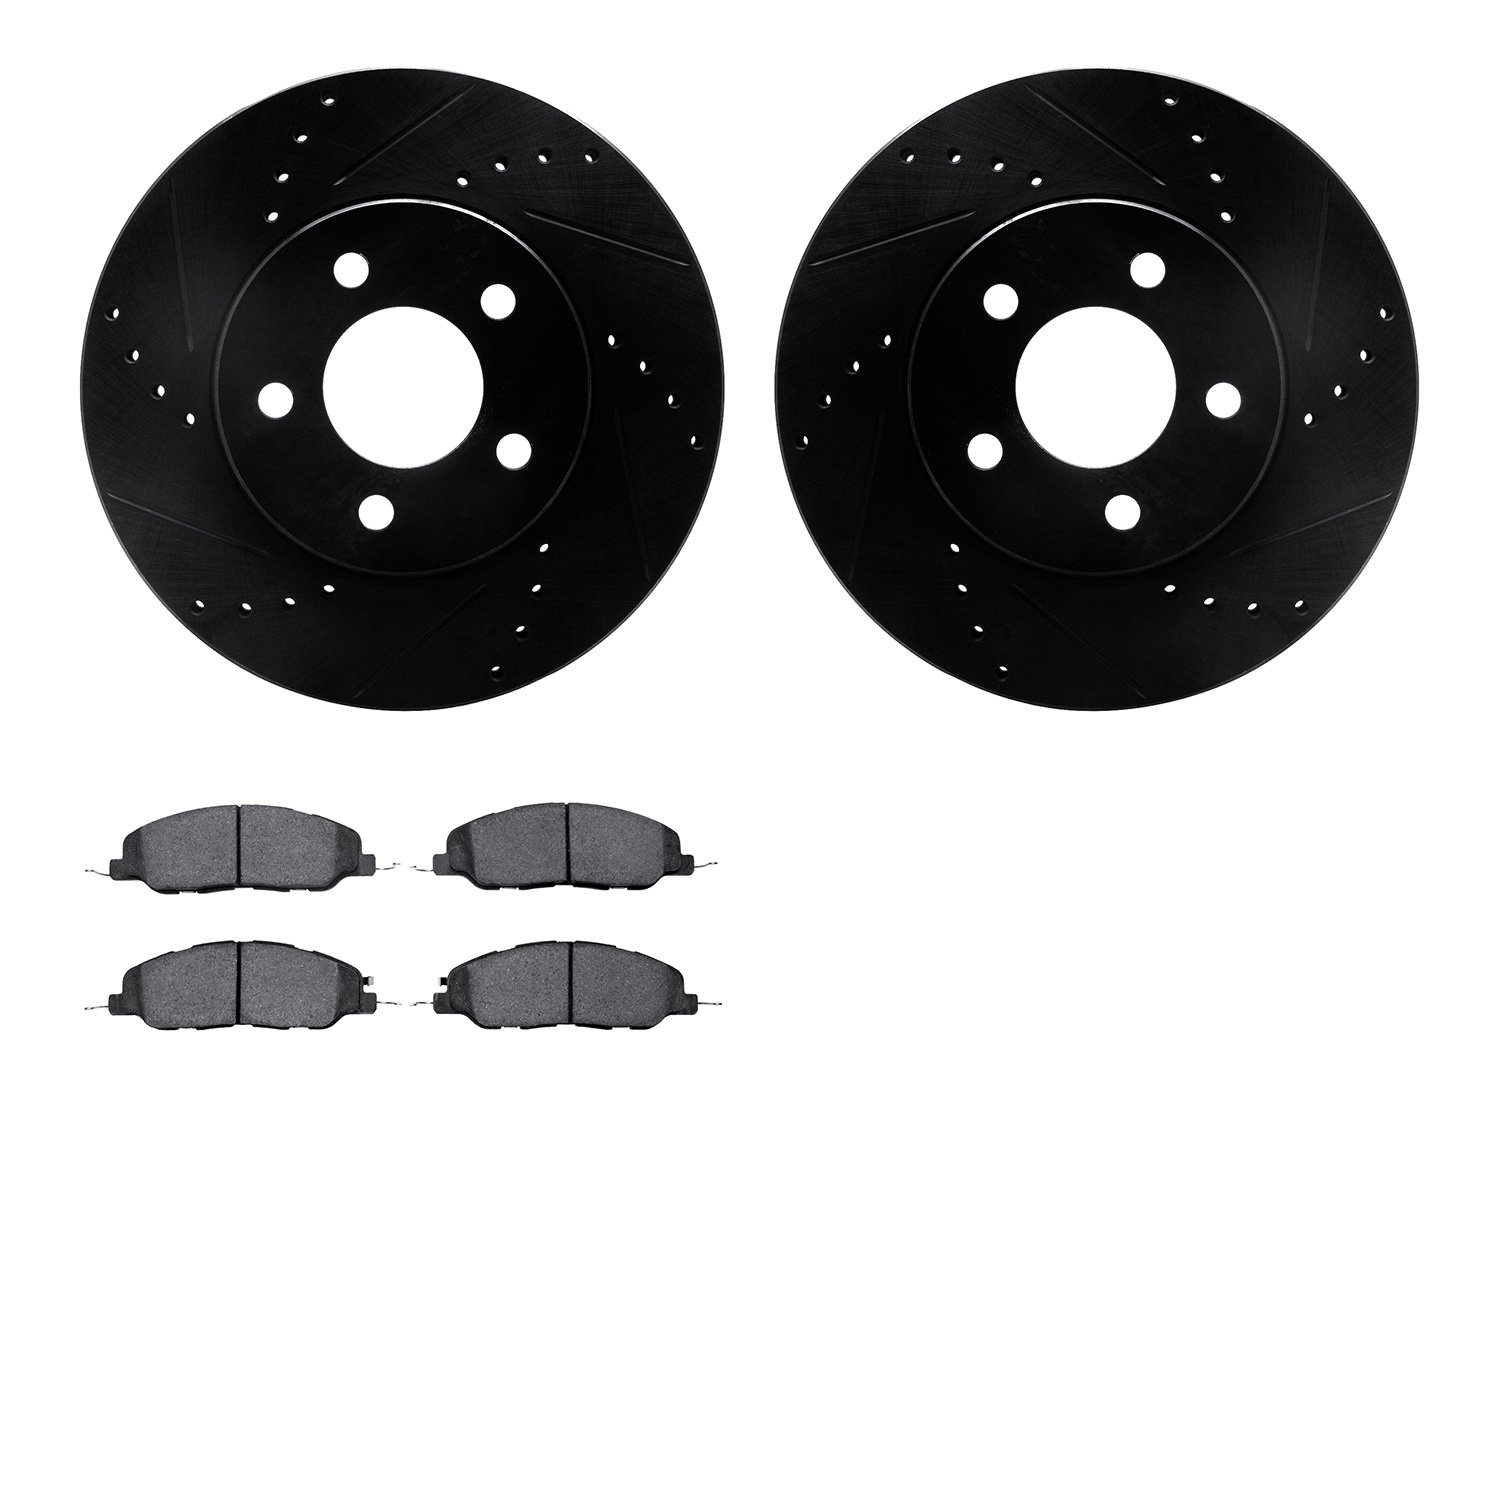 8302-54198 Drilled/Slotted Brake Rotors with 3000-Series Ceramic Brake Pads Kit [Black], 2005-2010 Ford/Lincoln/Mercury/Mazda, P